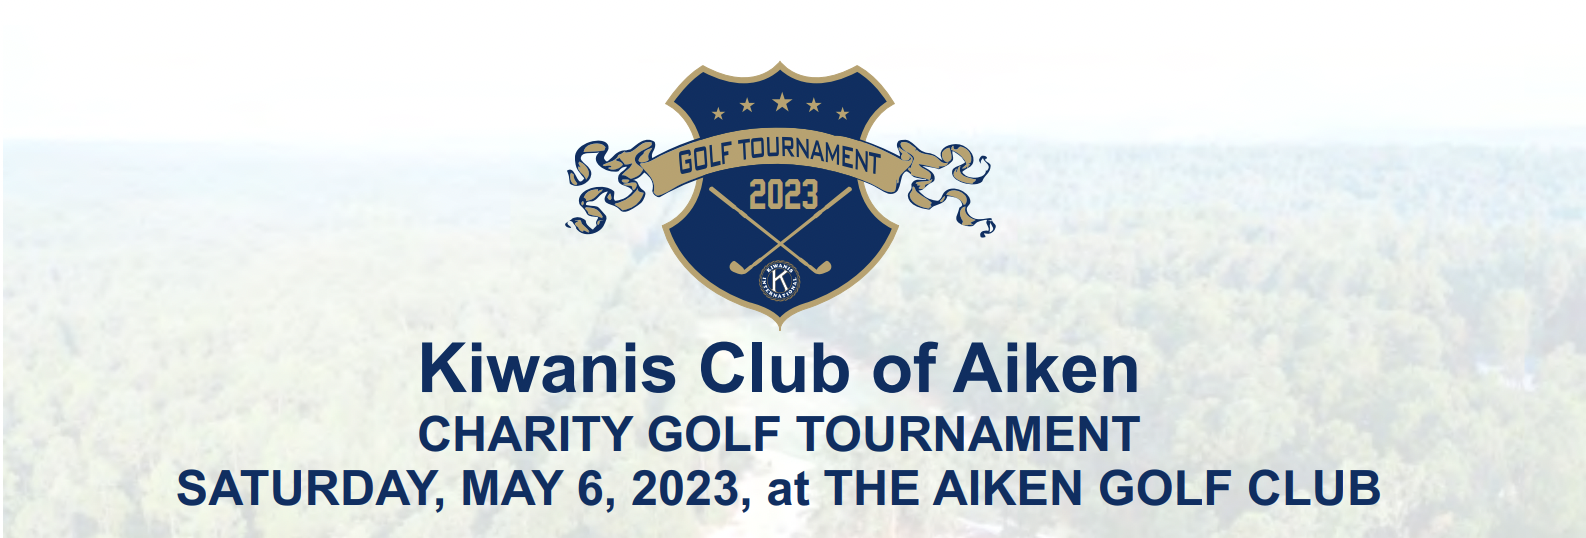 Kiwanis Club of Aiken Charity Golf Tournament